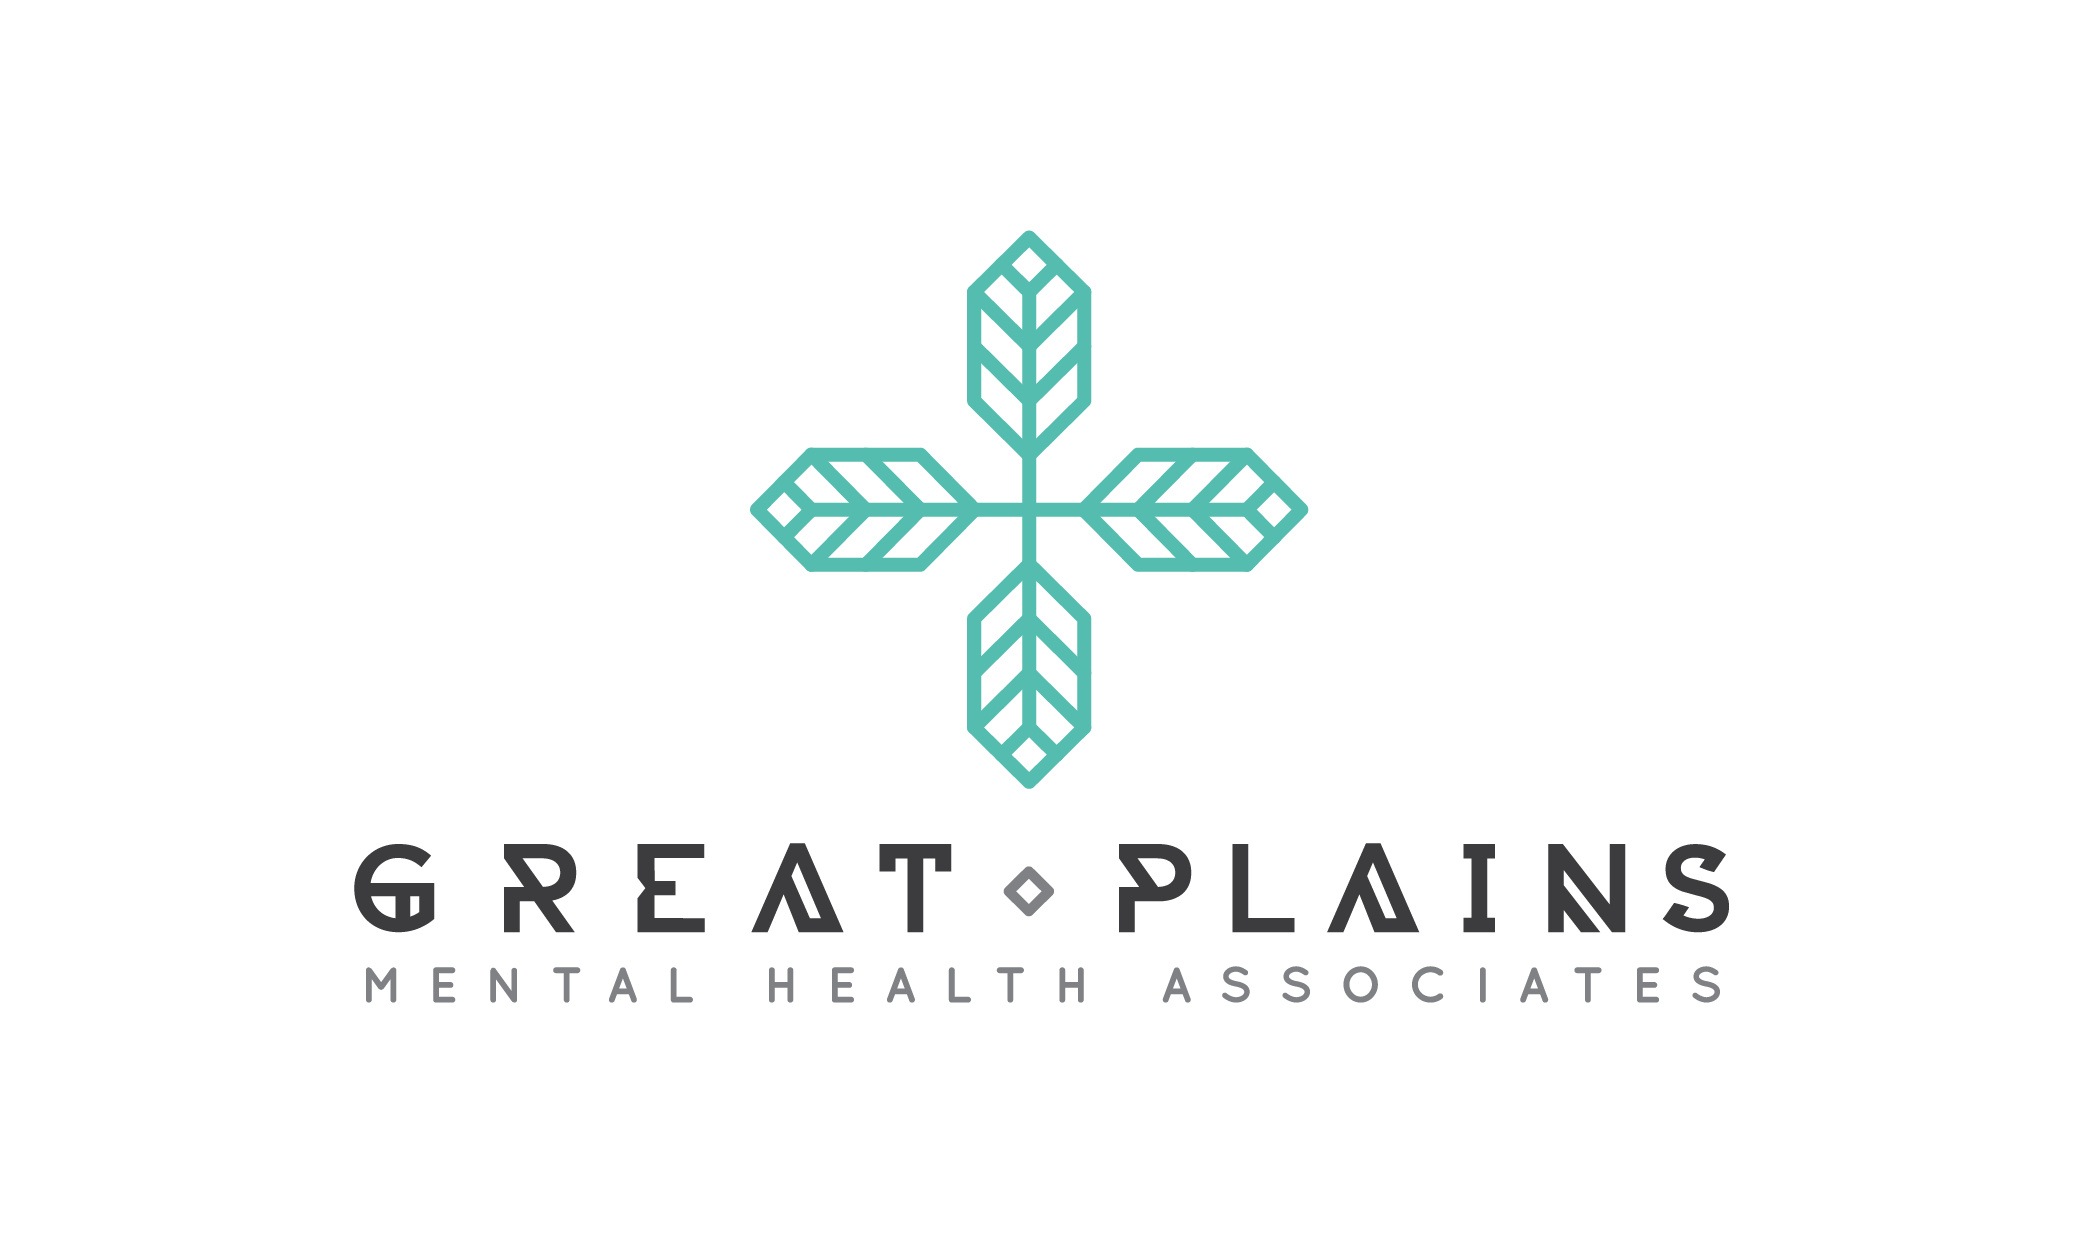 Great Plains Mental Health Associates logo